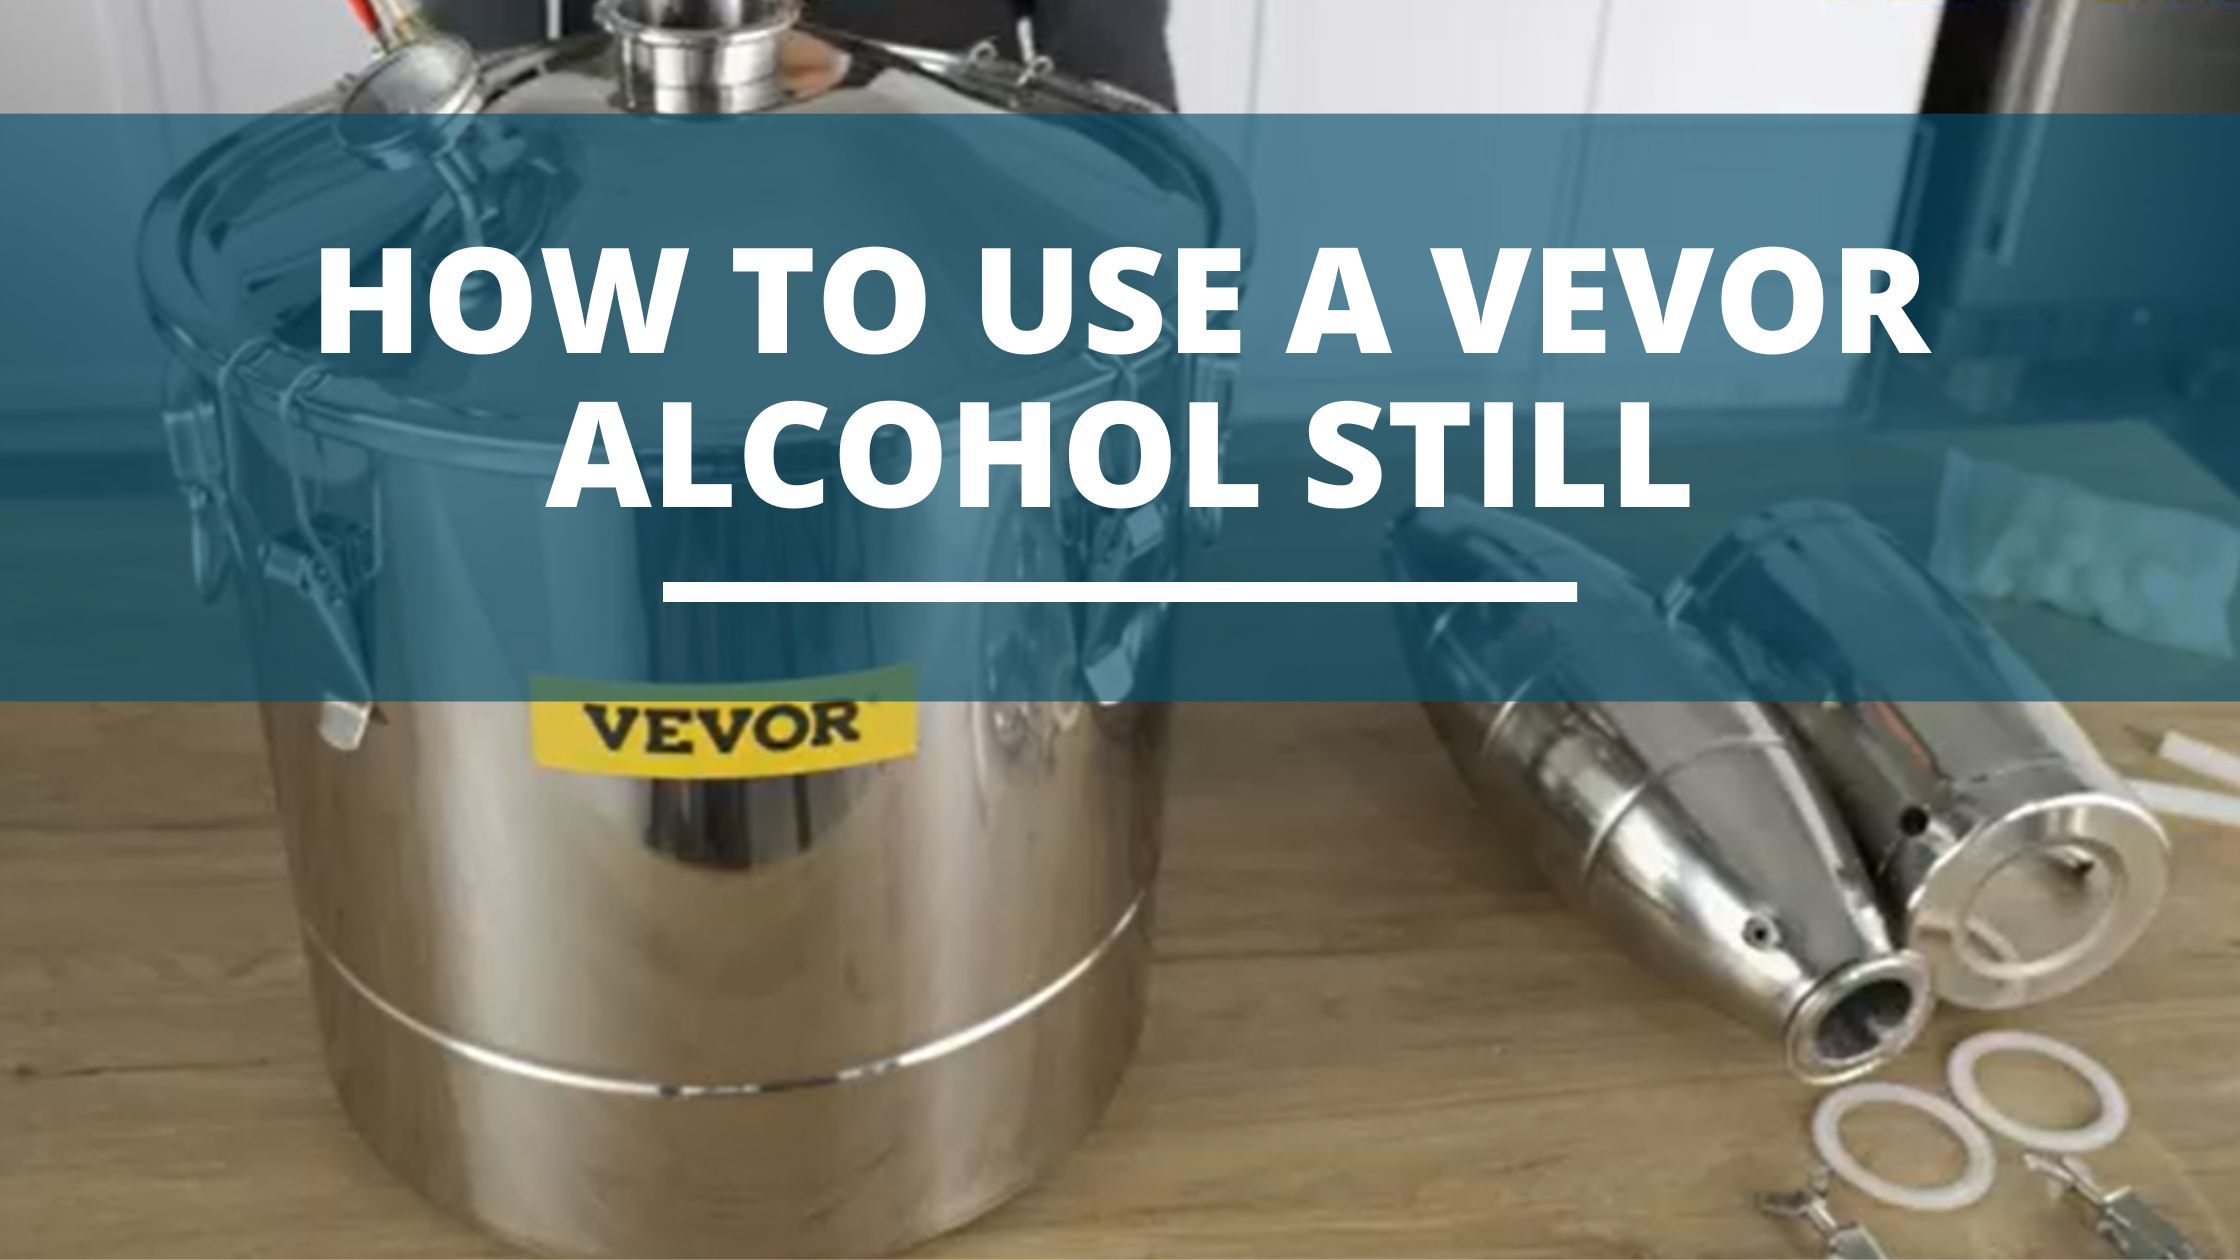 Vevor Still Instructions (A Step-By-Step Guide) - DIY Distilling